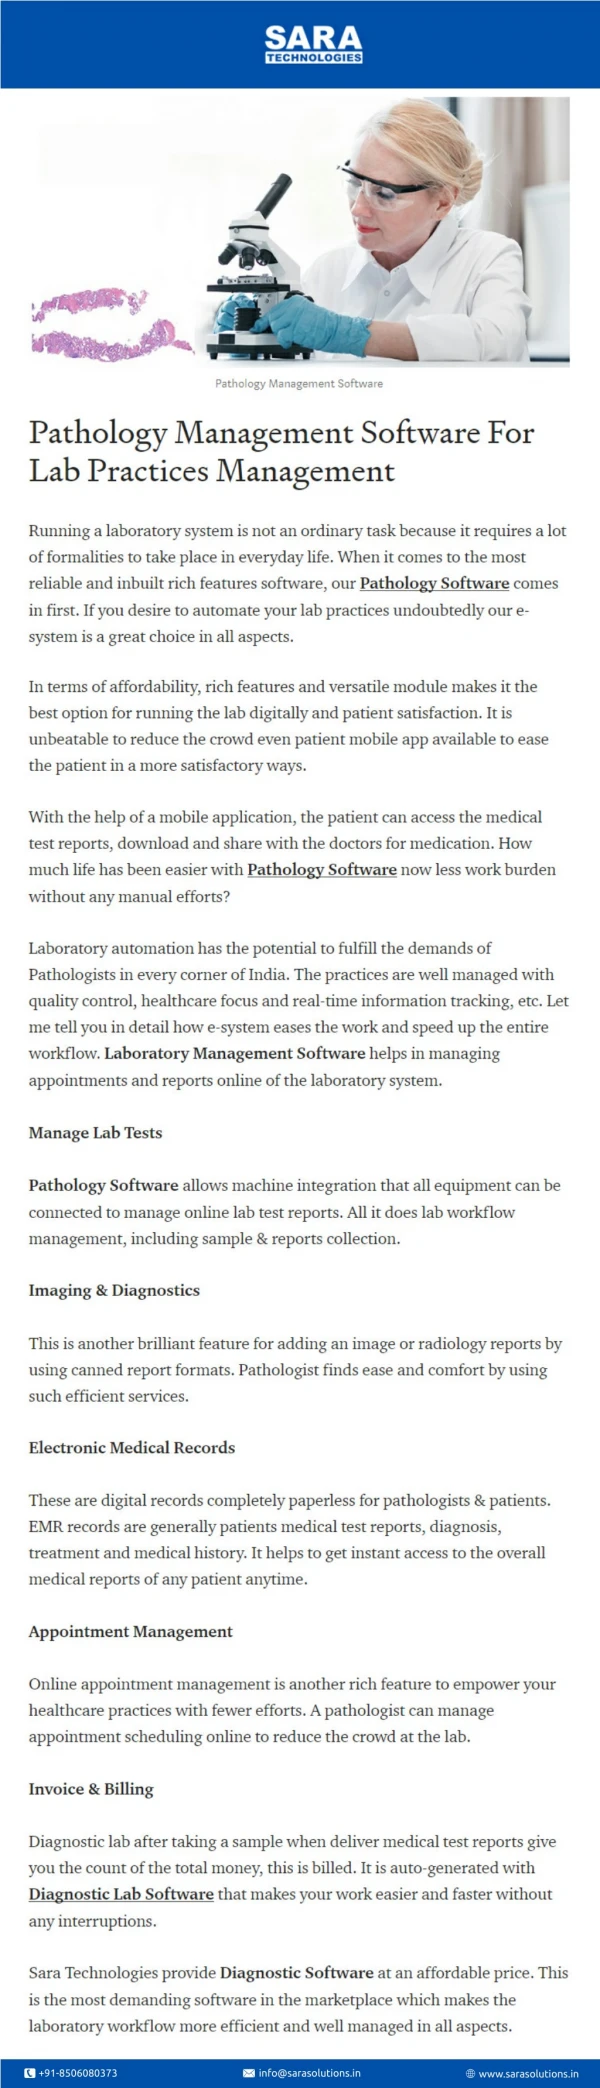 Pathology Management Software For Lab Practices Management